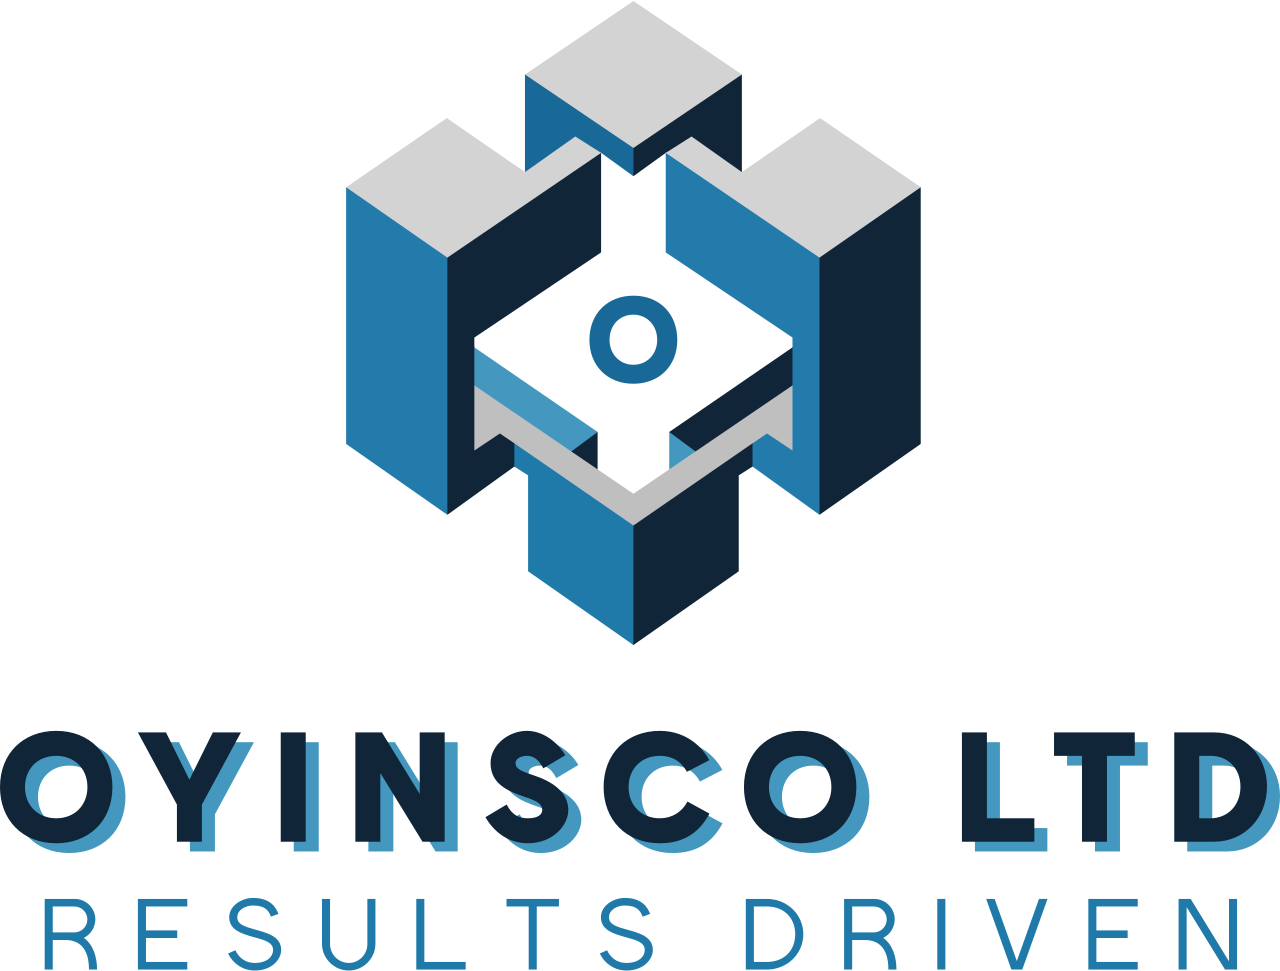 Oyinsco Ltd's logo